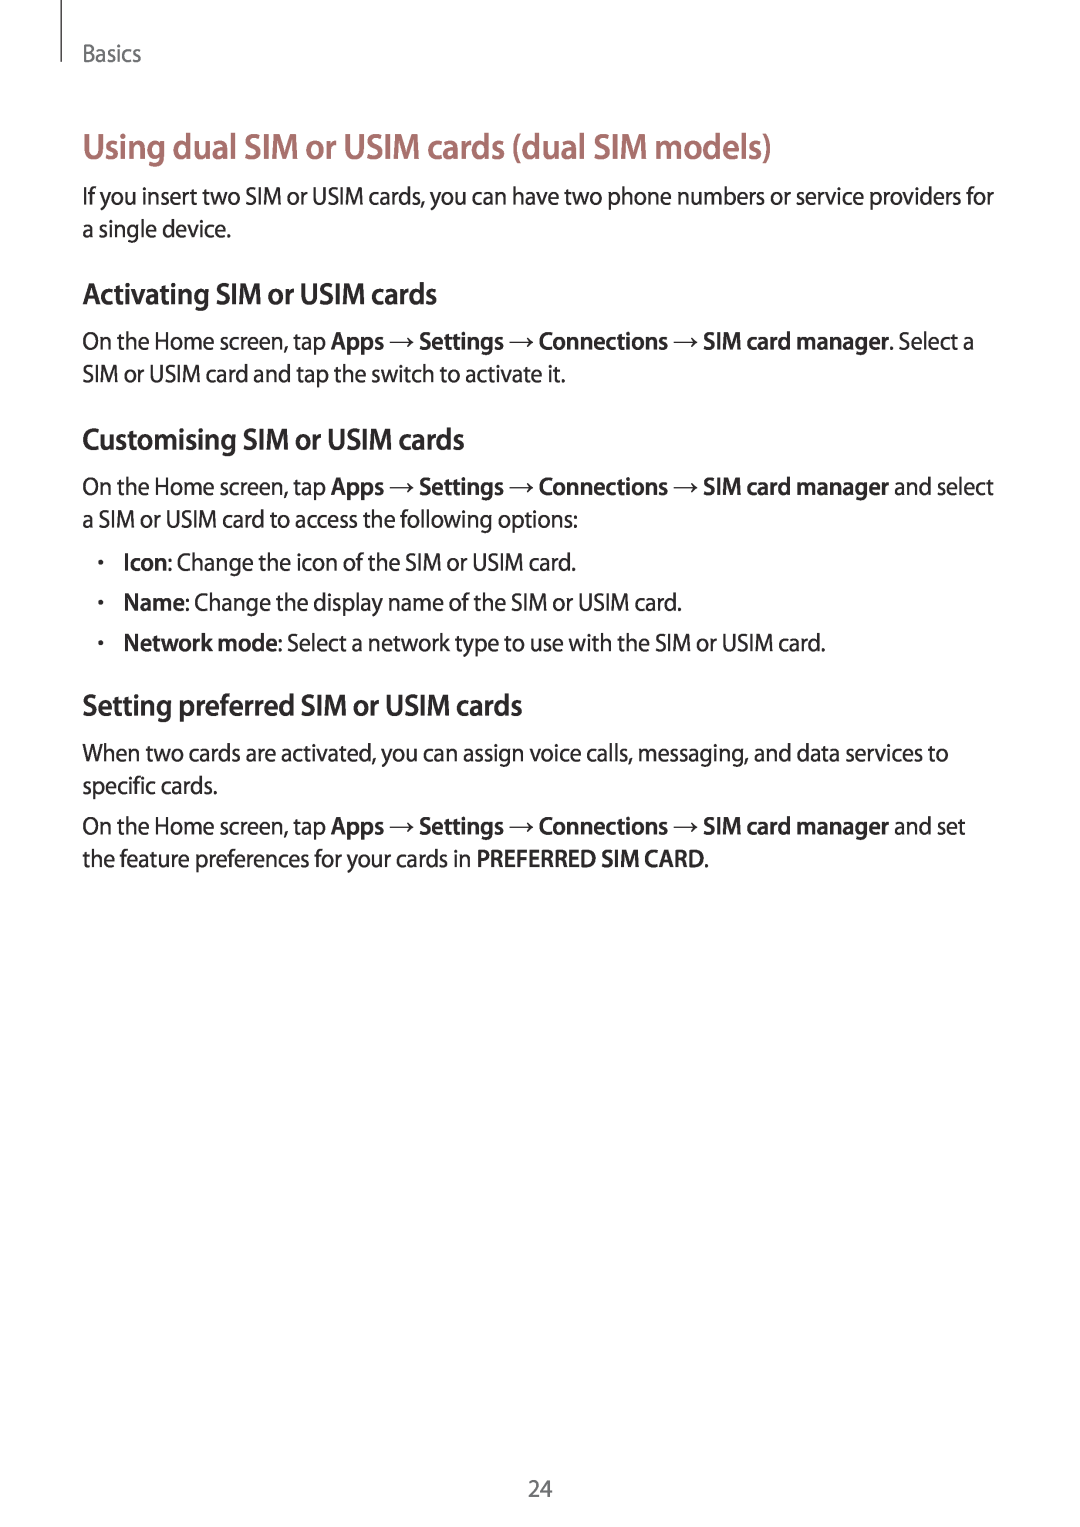 Samsung SM-G925FZWAXEF, SM-G925FZKADBT Using dual SIM or USIM cards dual SIM models, Activating SIM or USIM cards, Basics 